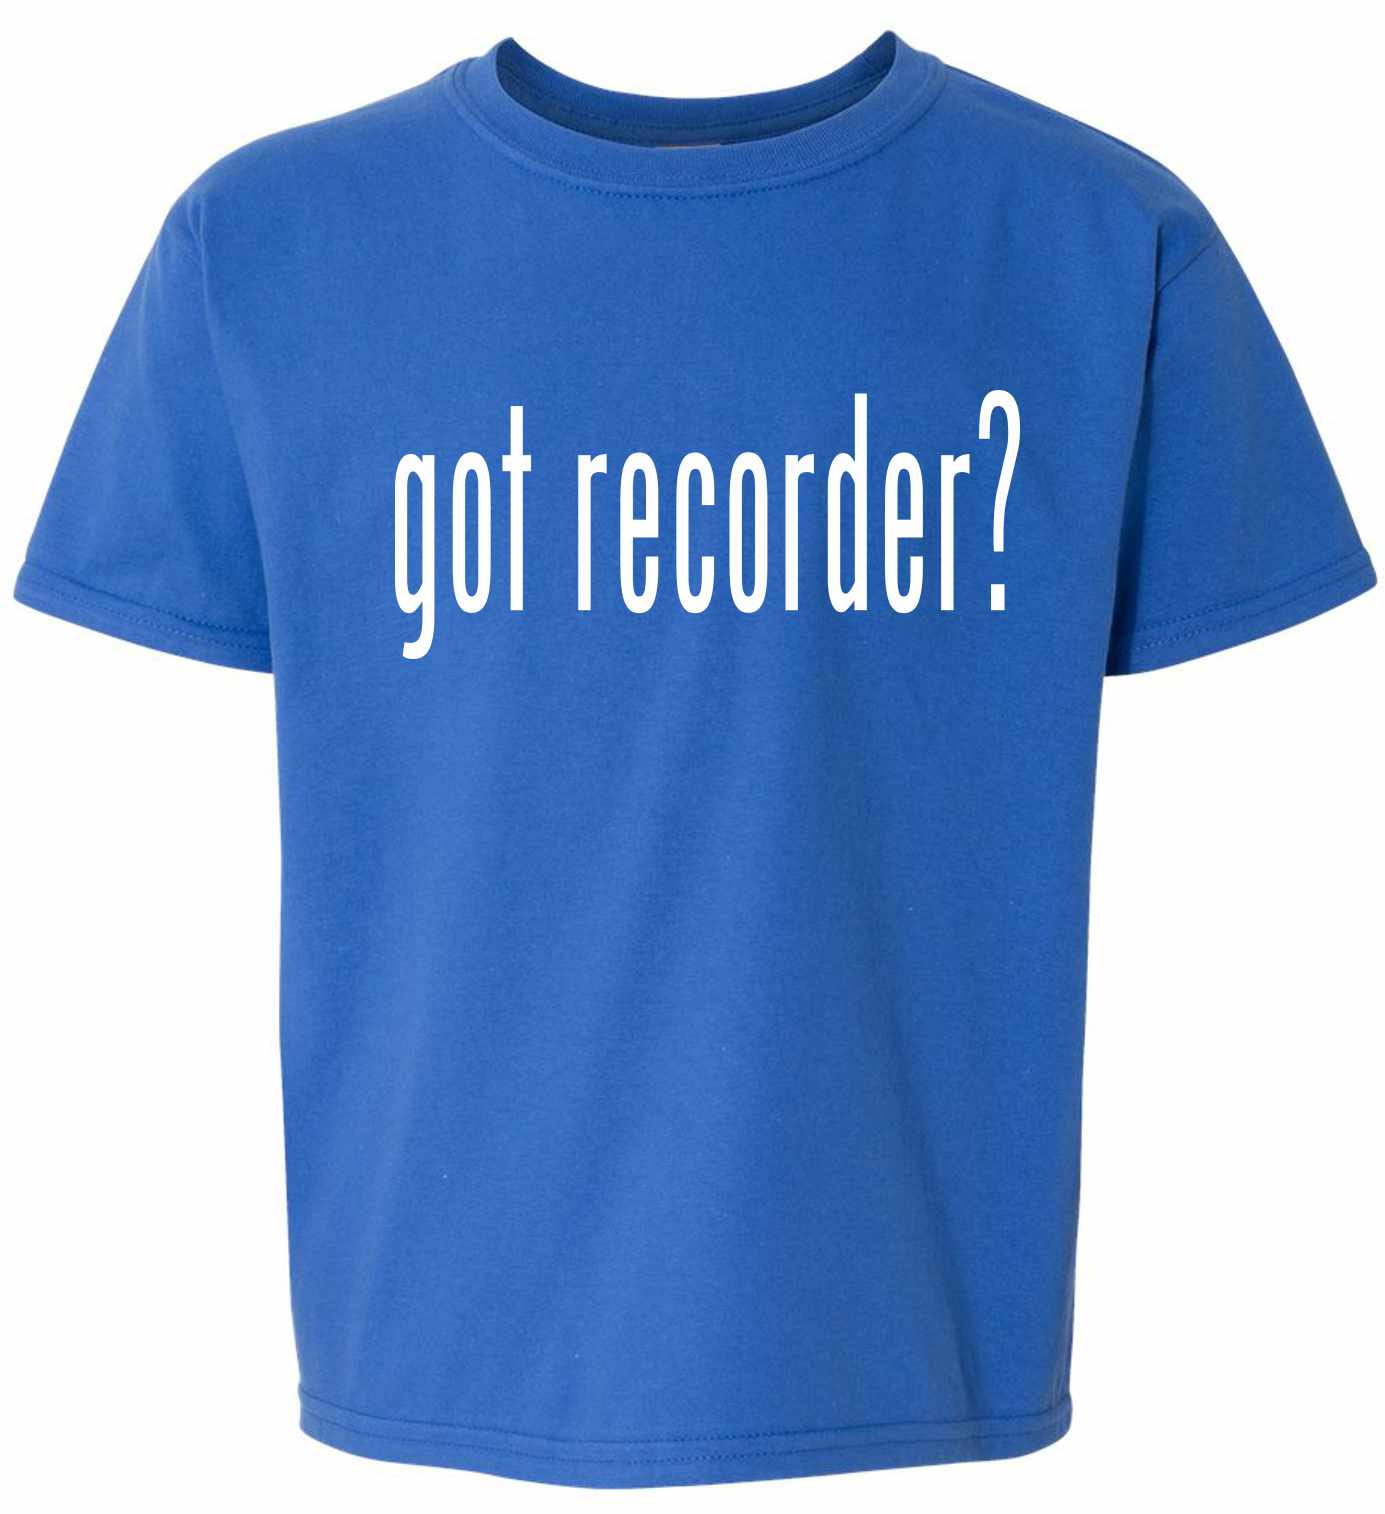 Got Recorder? on Kids T-Shirt